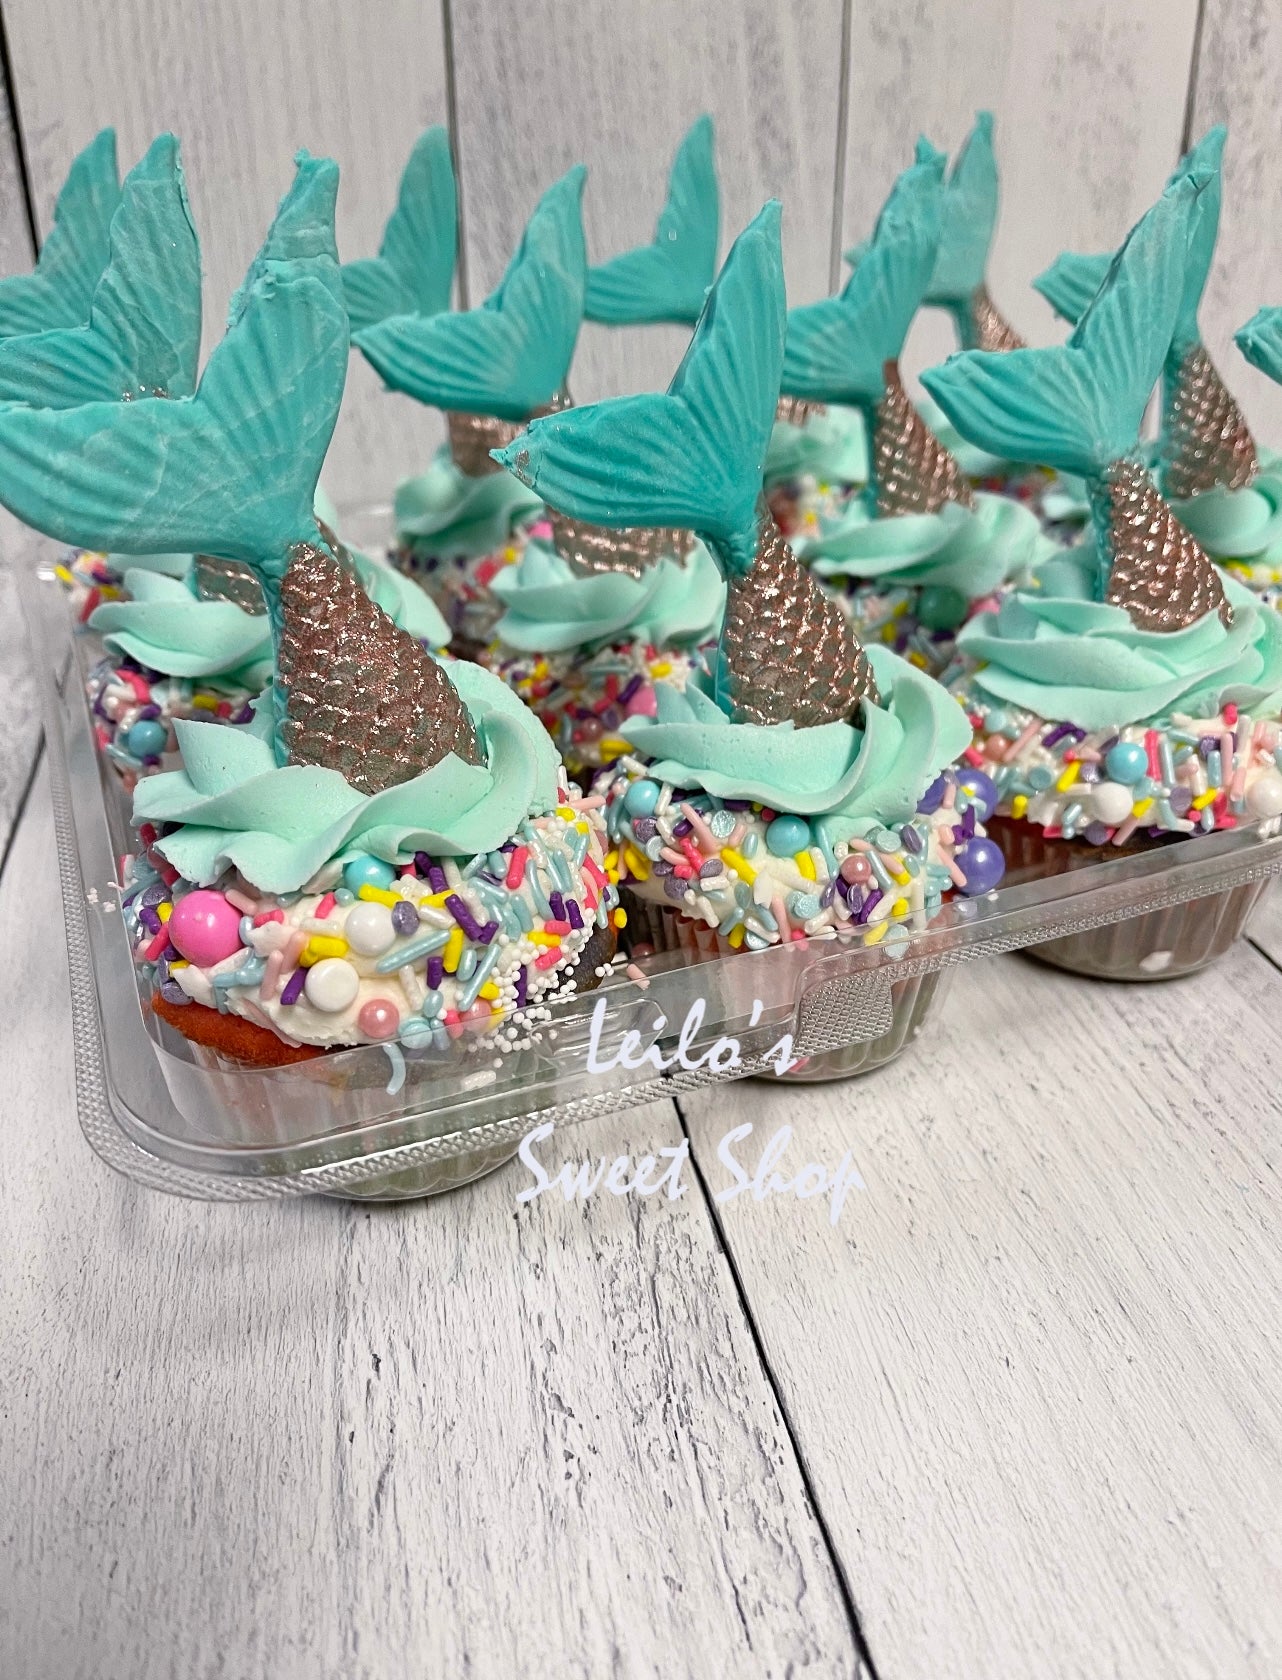 Customized Cupcakes